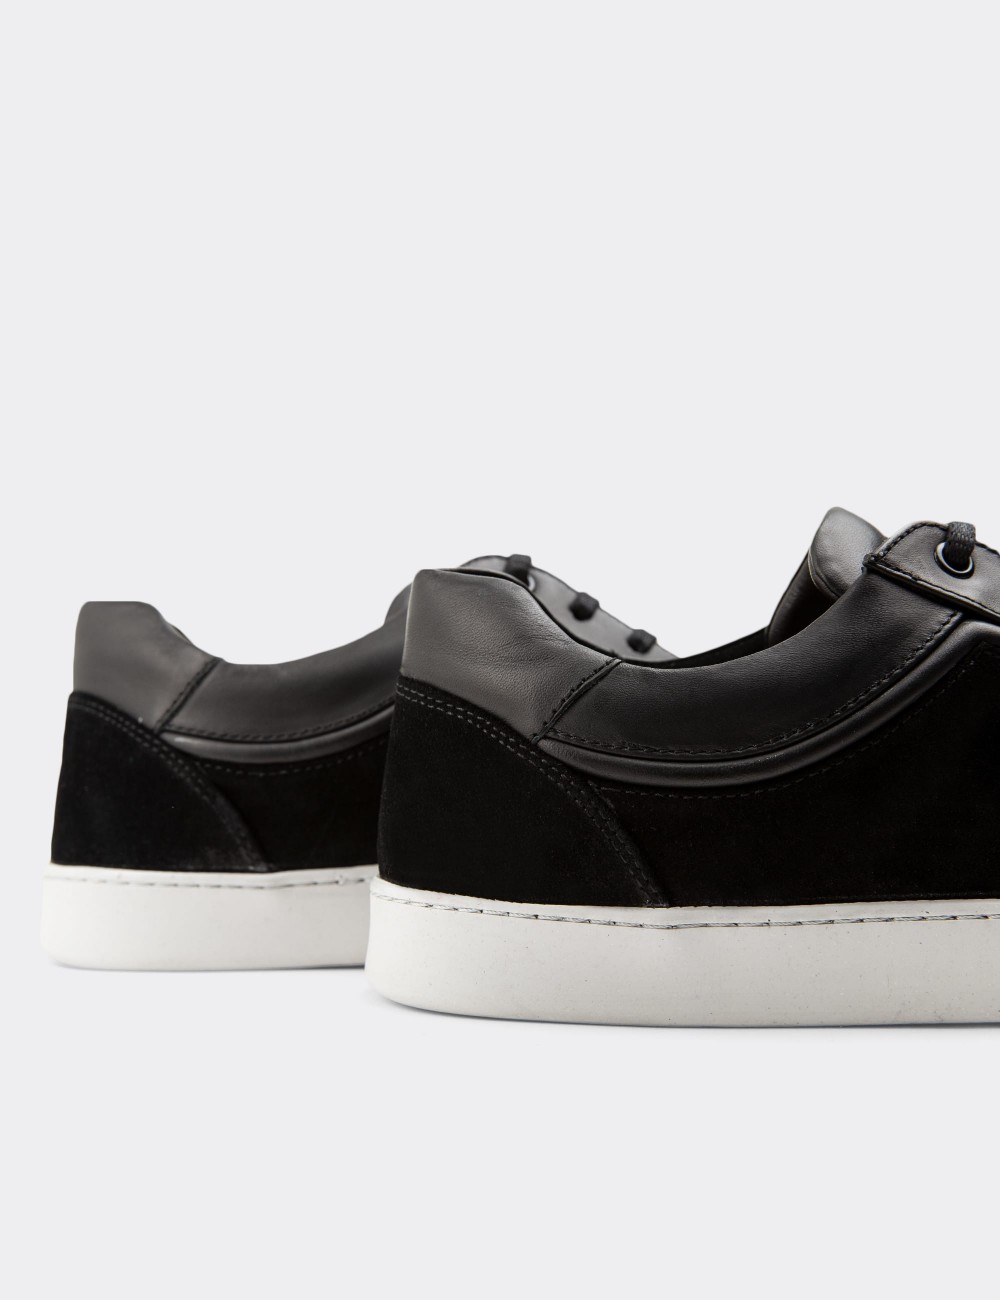 Black Suede Leather Sneakers - 01877MSYHP02